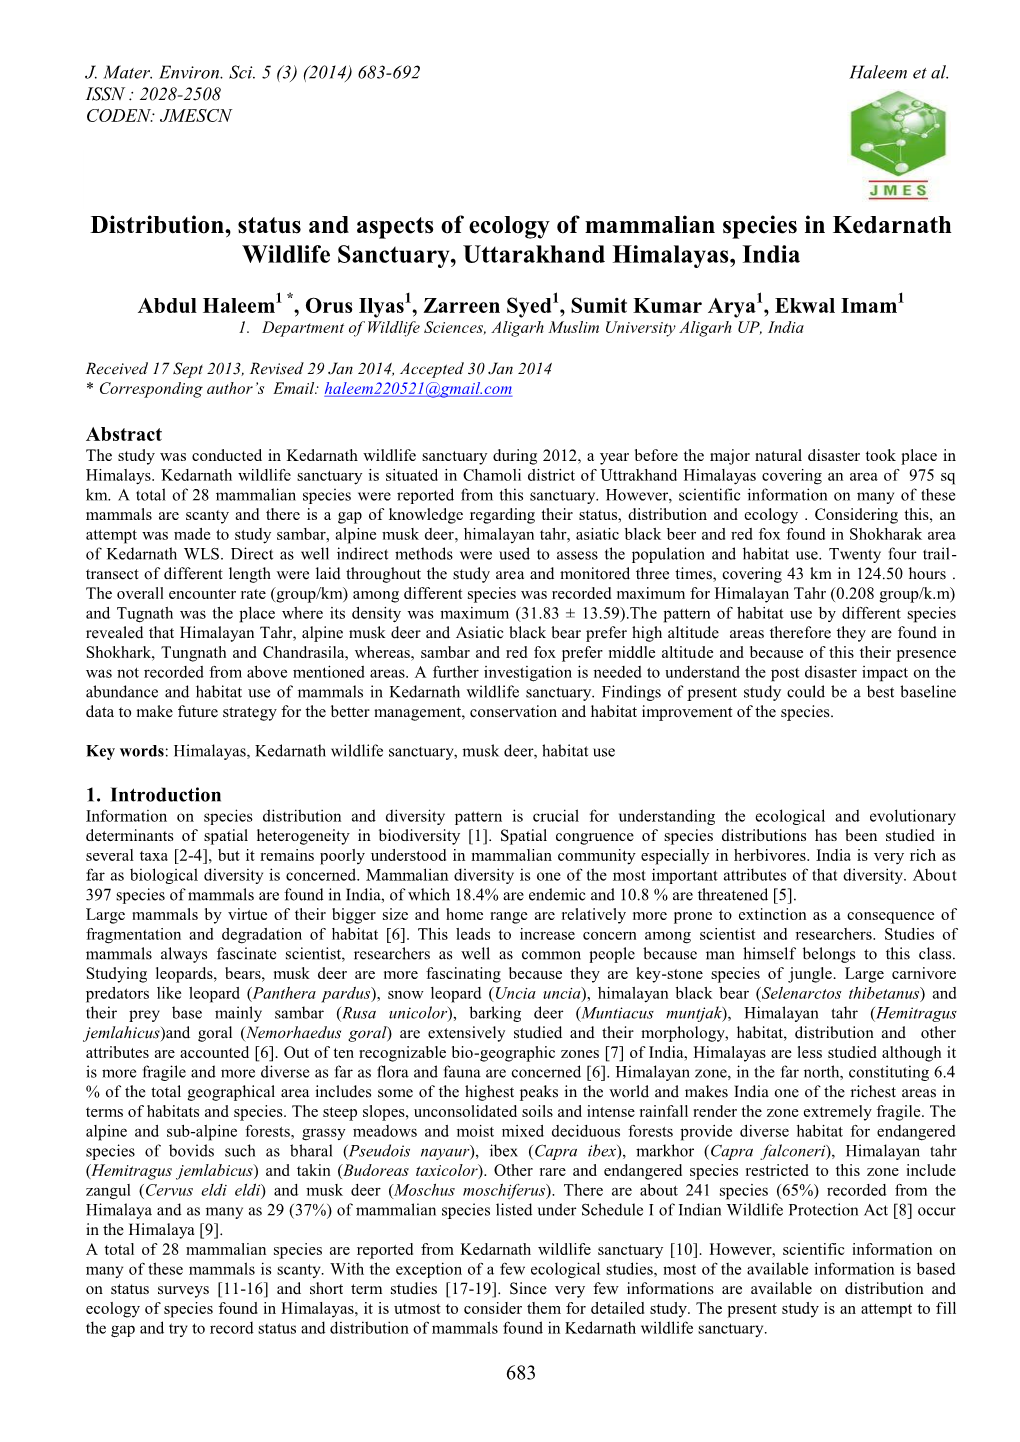 Distribution, Status and Aspects of Ecology of Mammalian Species in Kedarnath Wildlife Sanctuary, Uttarakhand Himalayas, India